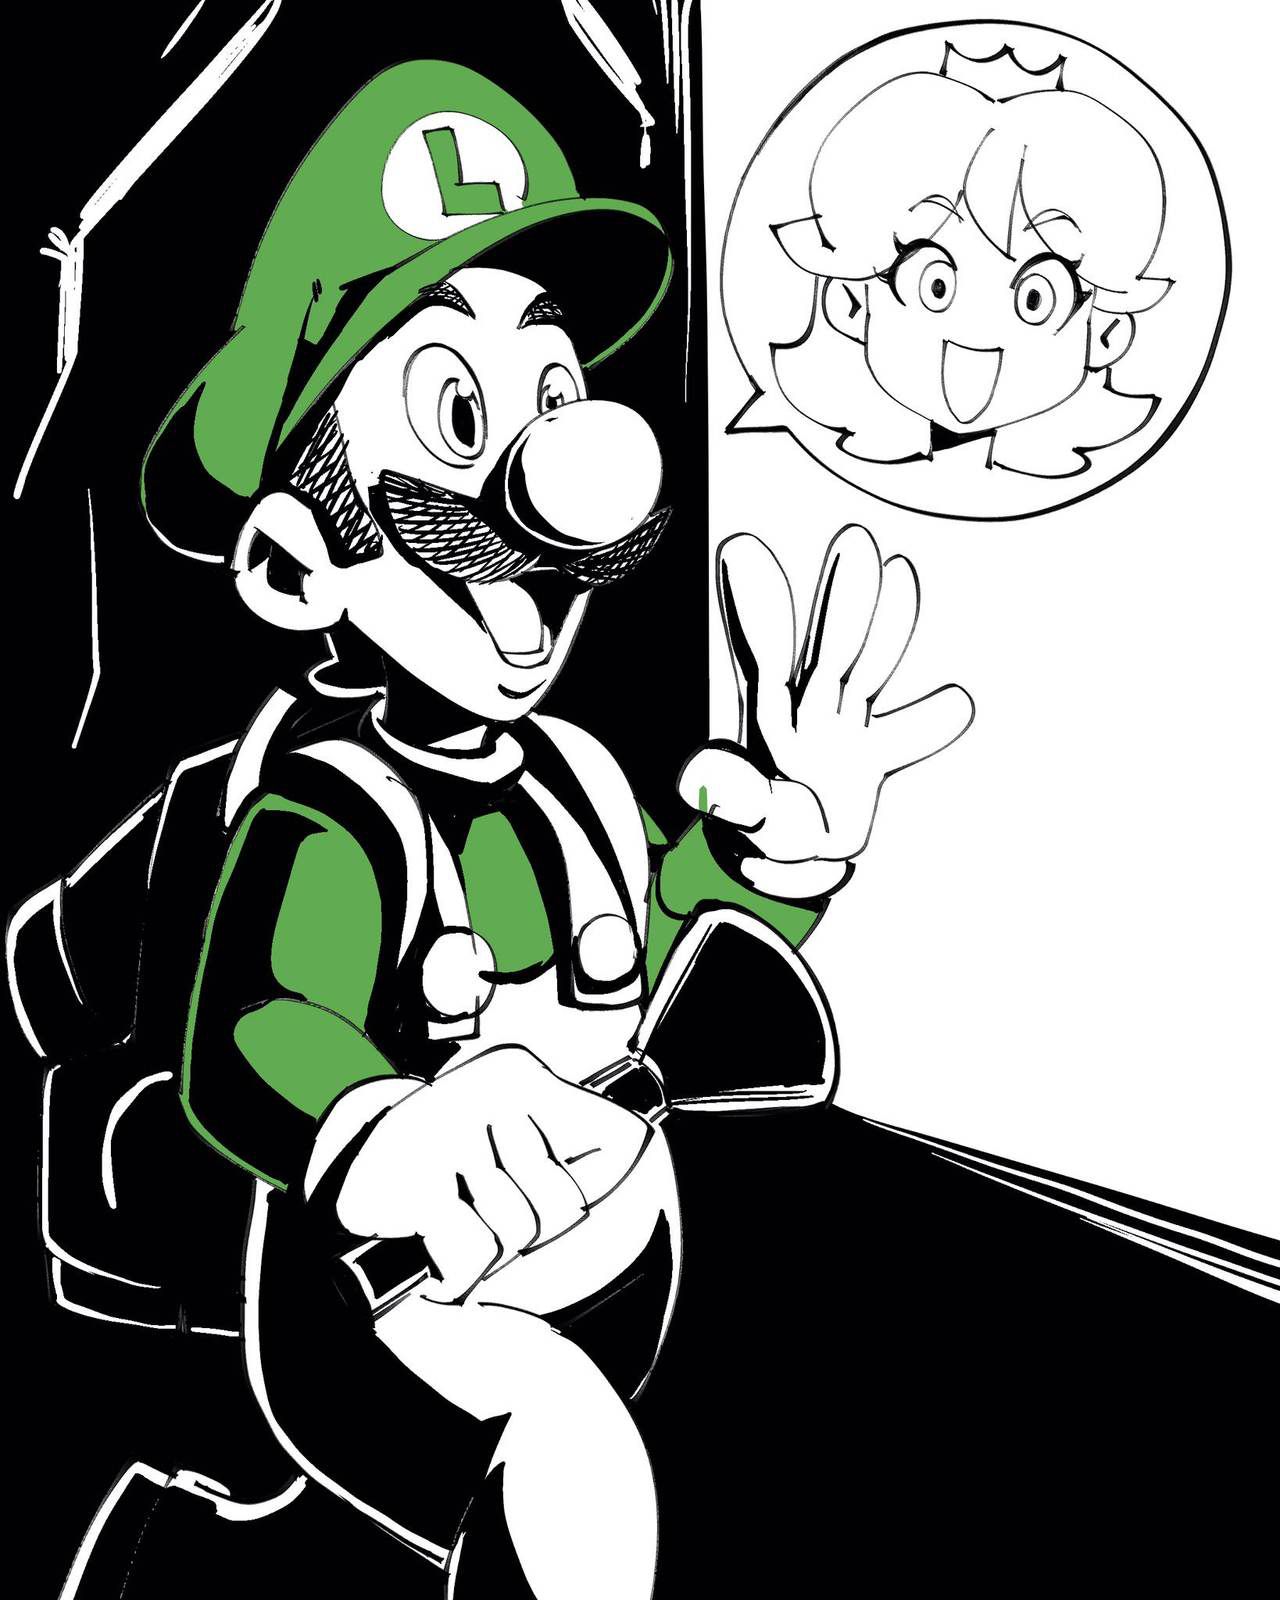 [Nisego] Inktober 2 - Luigi's Mansion (Super Mario Bros.) [Ongoing] 12